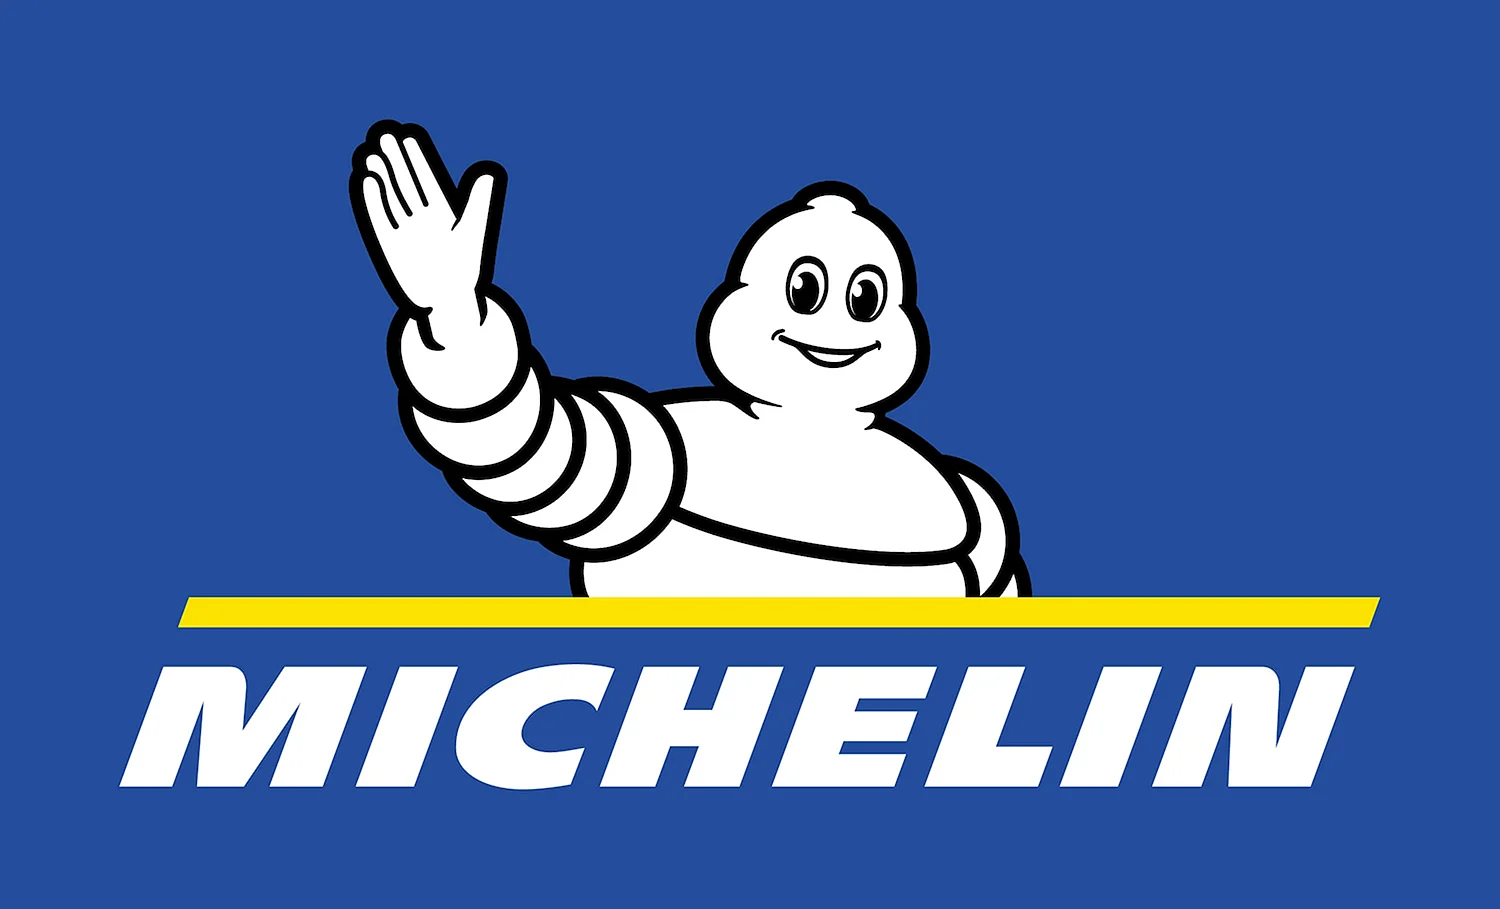 Michelin логотип